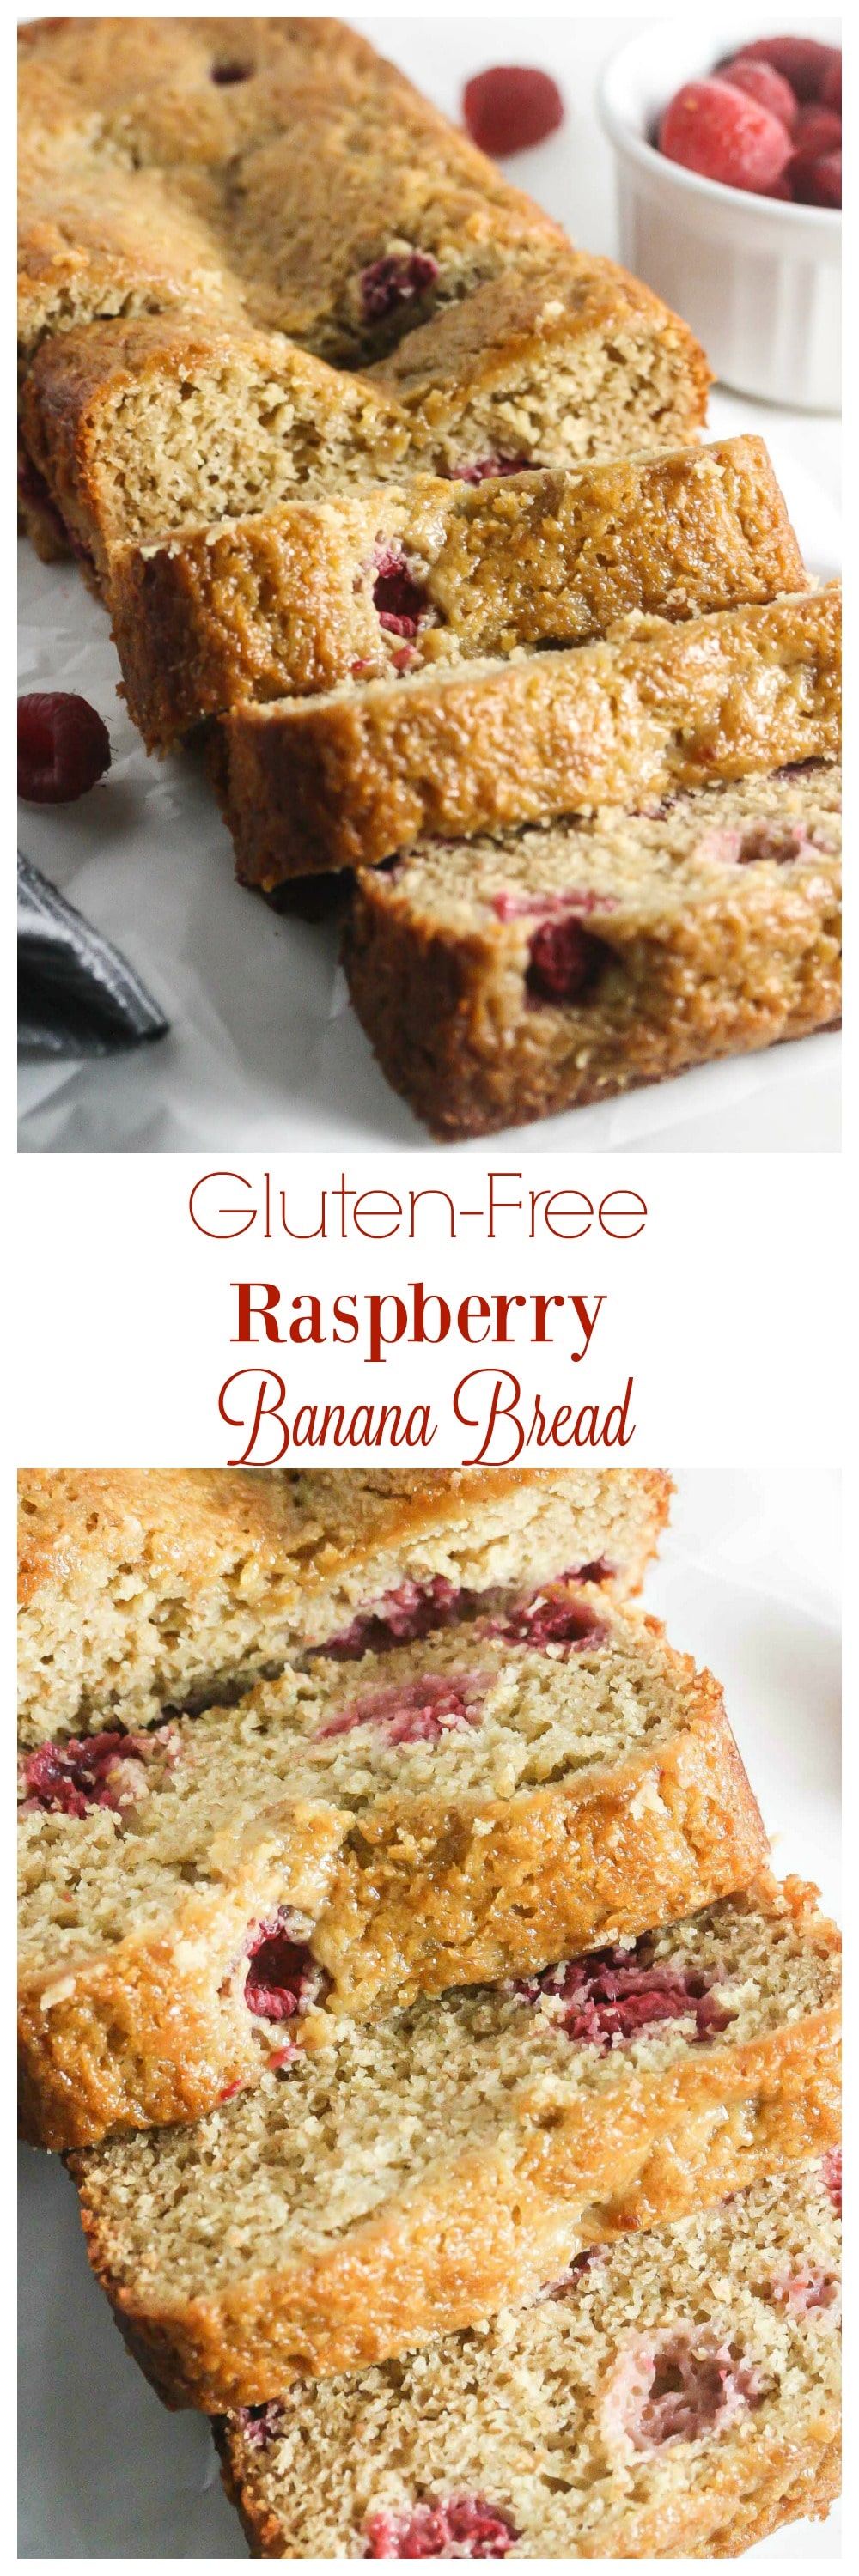 Gluten Free Raspberry Banana Bread made lighter, healthier and still delicious! www.laurenkellynutrition.com